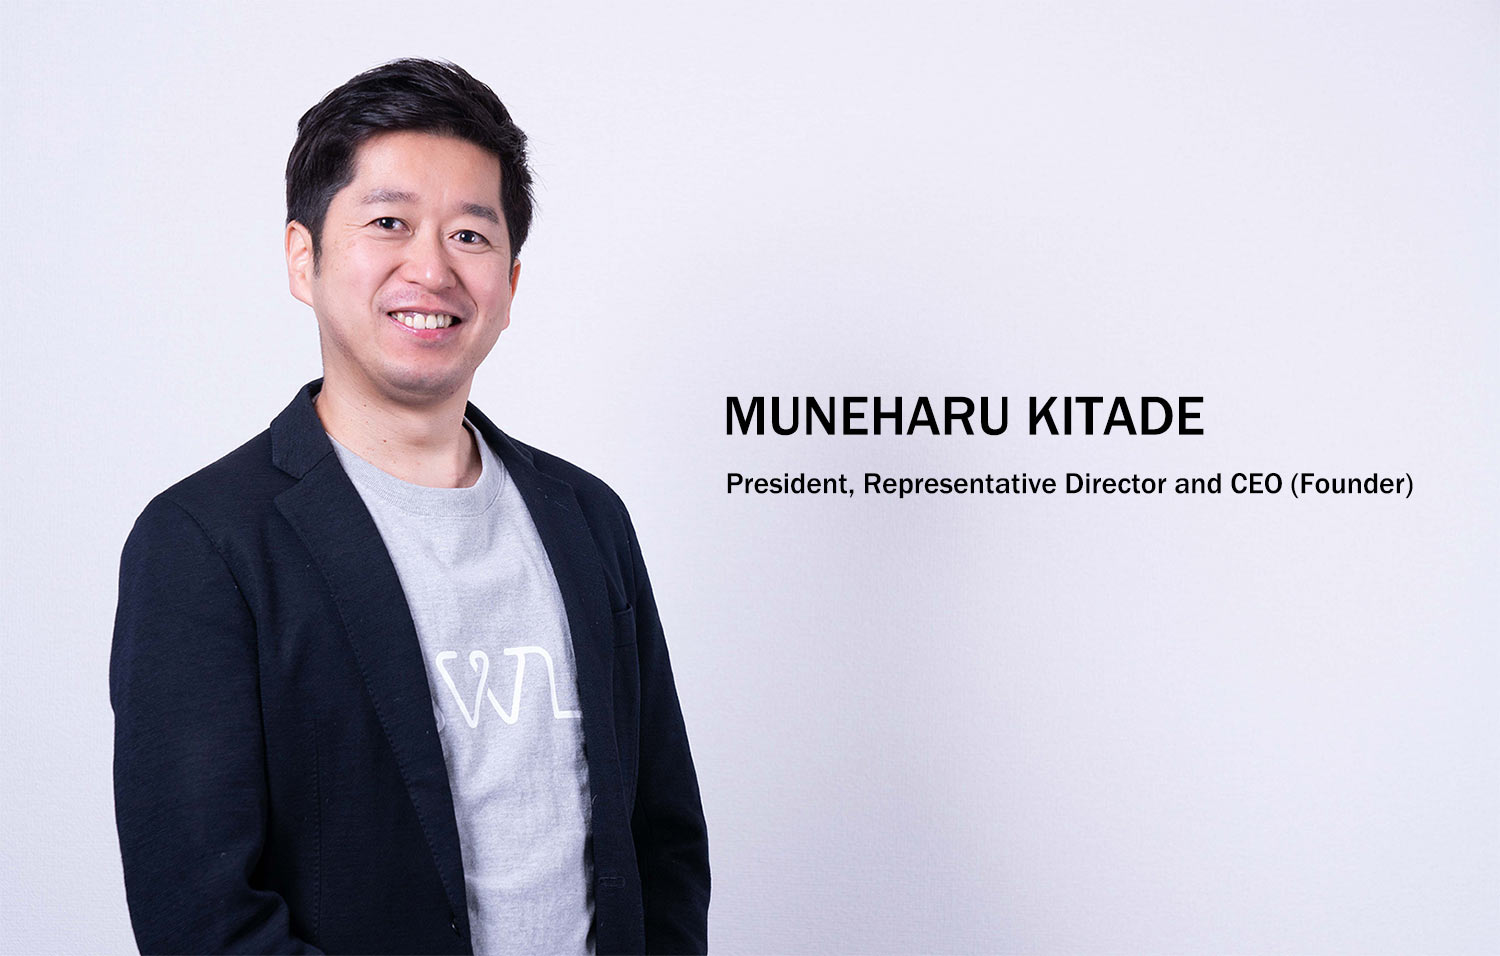 Muneharu Kitade President, Representative Director and CEO (Founder)